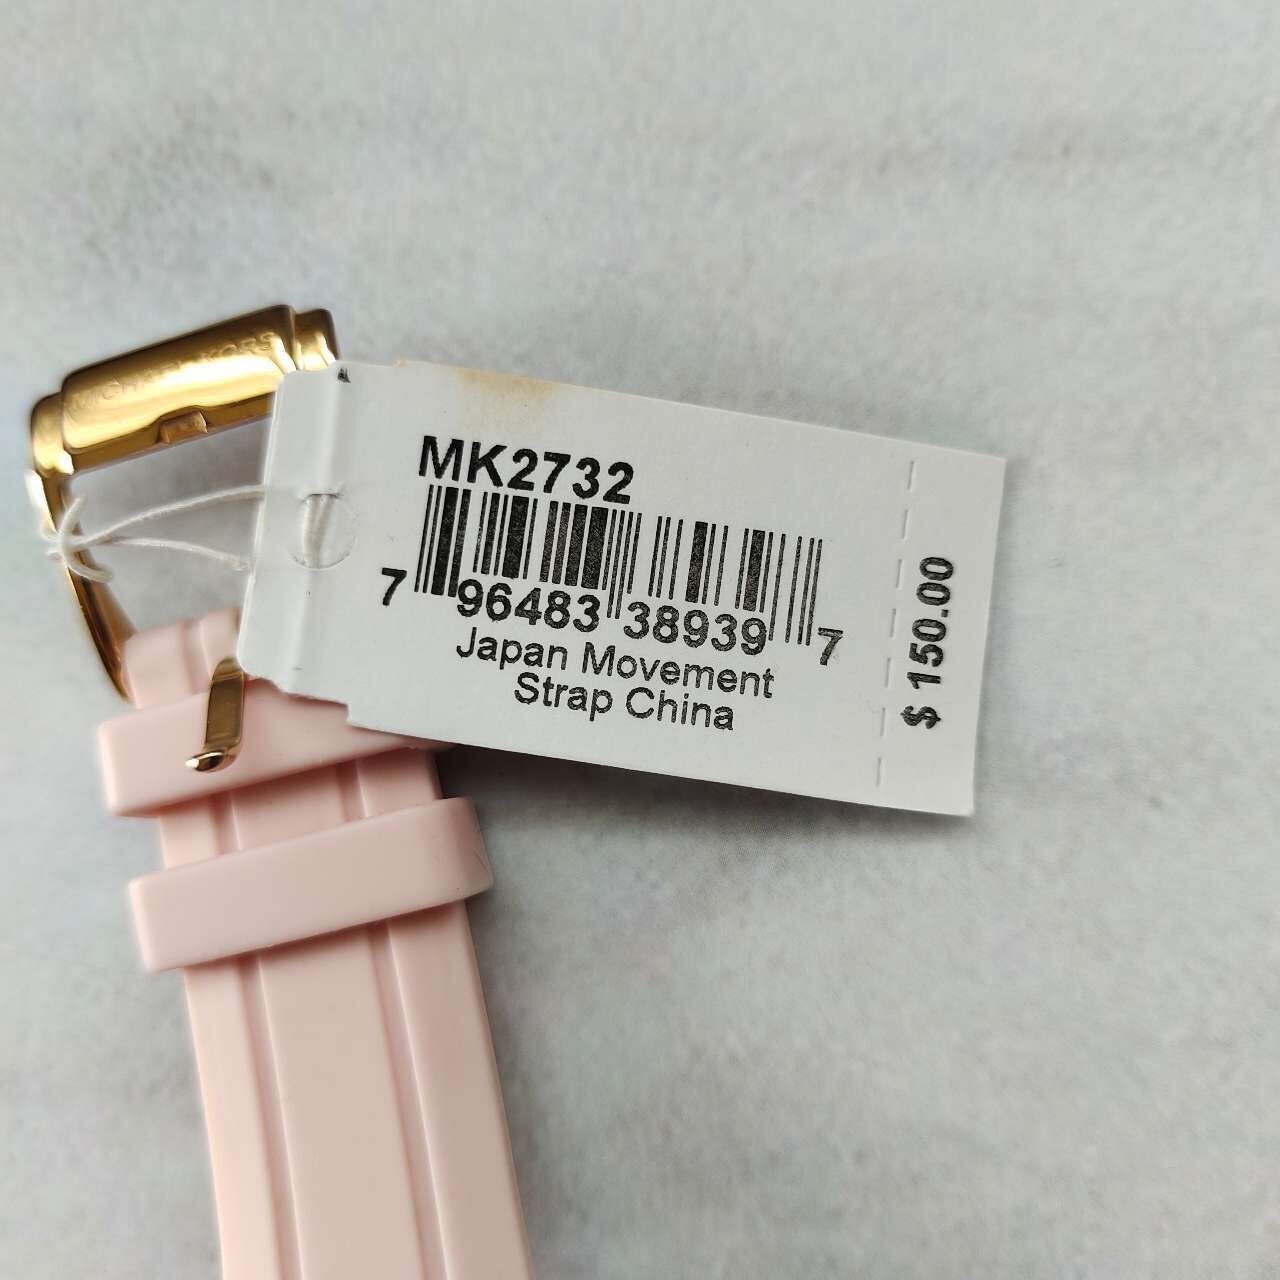 Michael Kors 2732 Pink Rubber Strap Watch